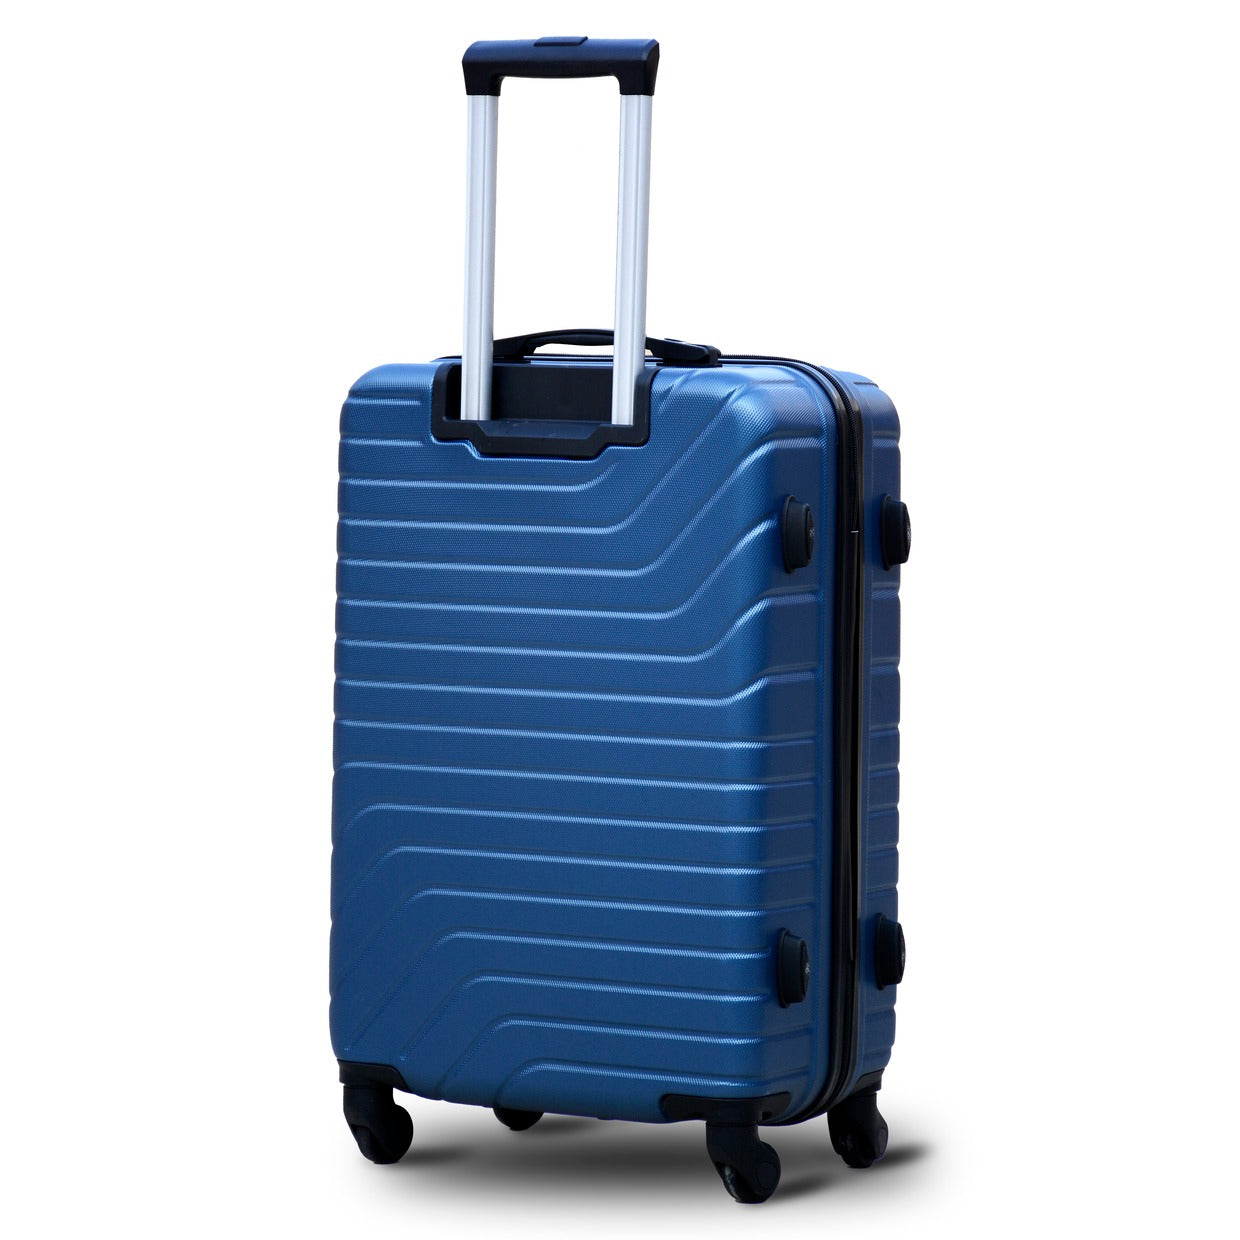 20" Blue Colour SJ ABS Luggage Lightweight Hard Case Trolley Bag Zaappy.com